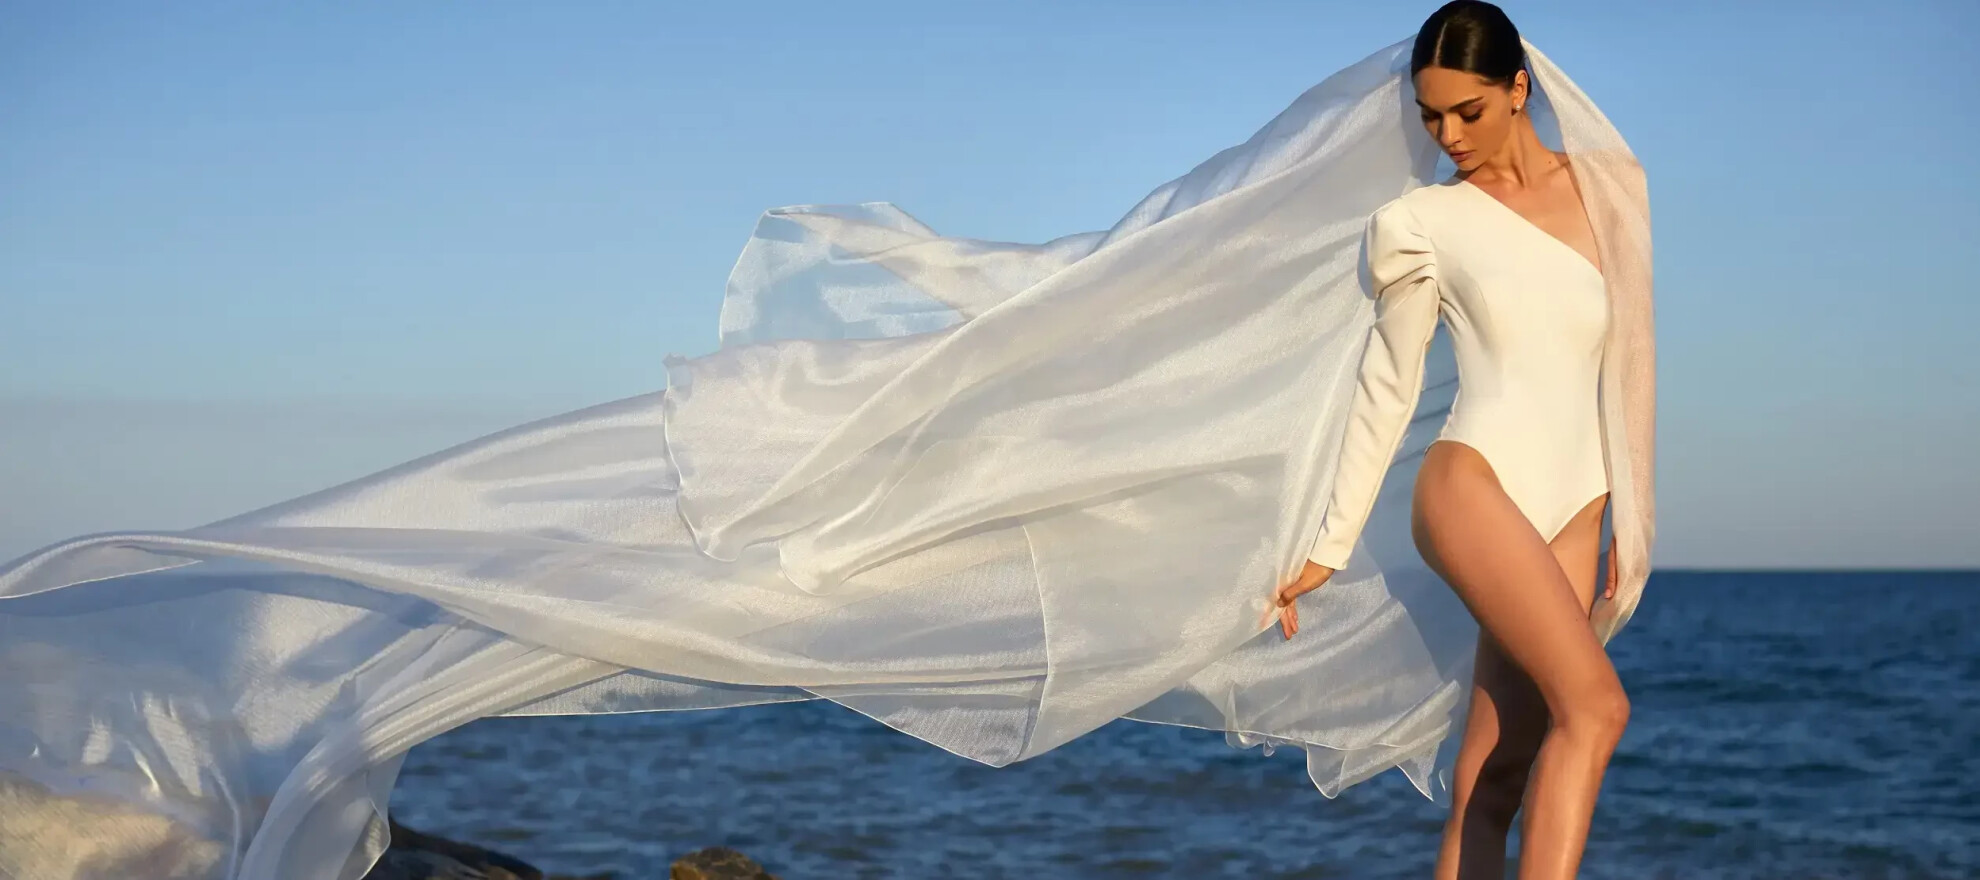 26 Gorgeous Beach Wedding Dresses That Inspire - Weddingomania